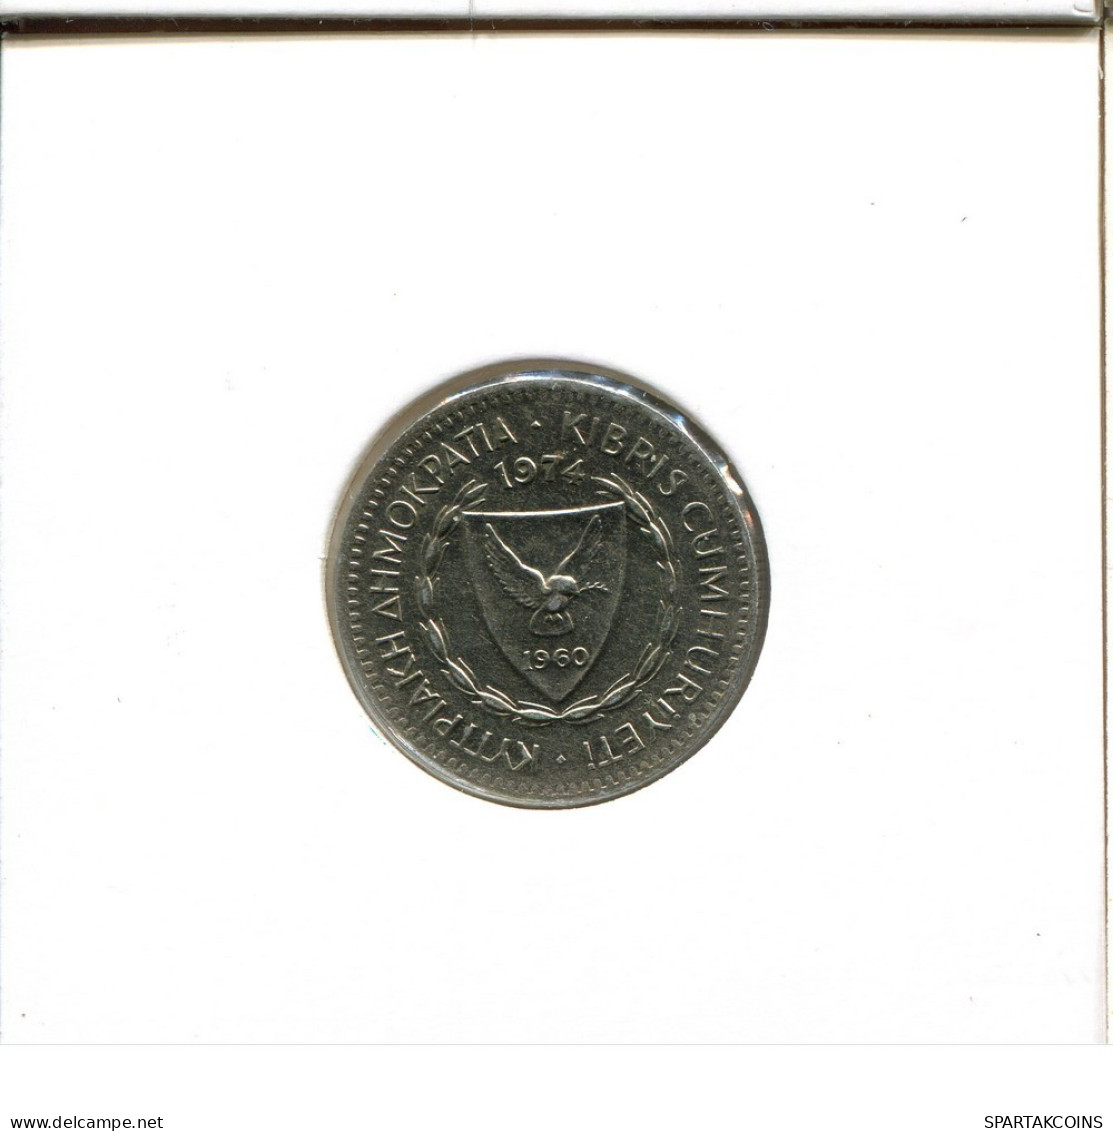 25 MILS 1974 CHIPRE CYPRUS Moneda #AZ870.E.A - Zypern